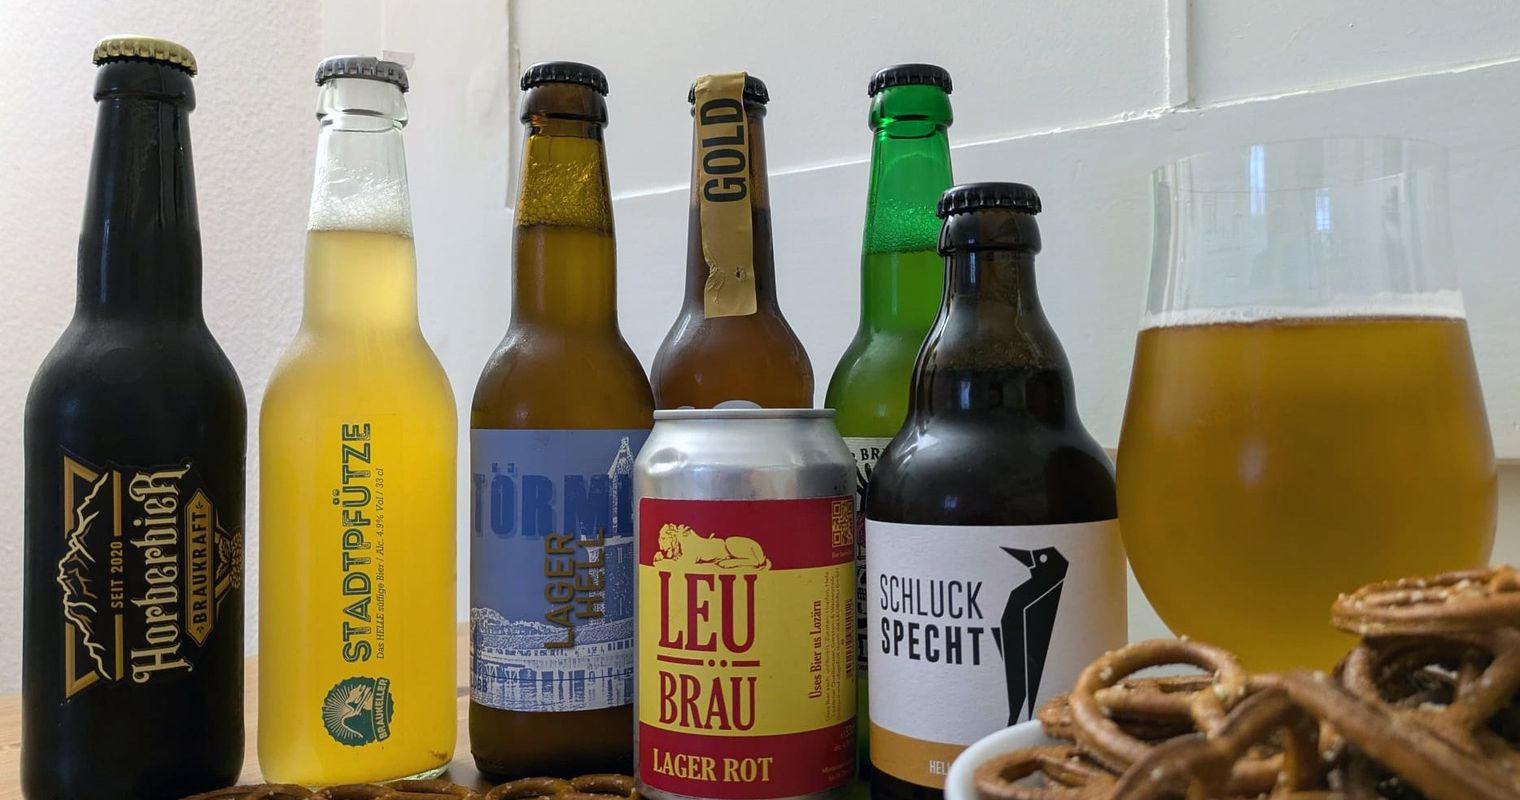 Bier-Test: Diese Lagerbiere kommen am besten an